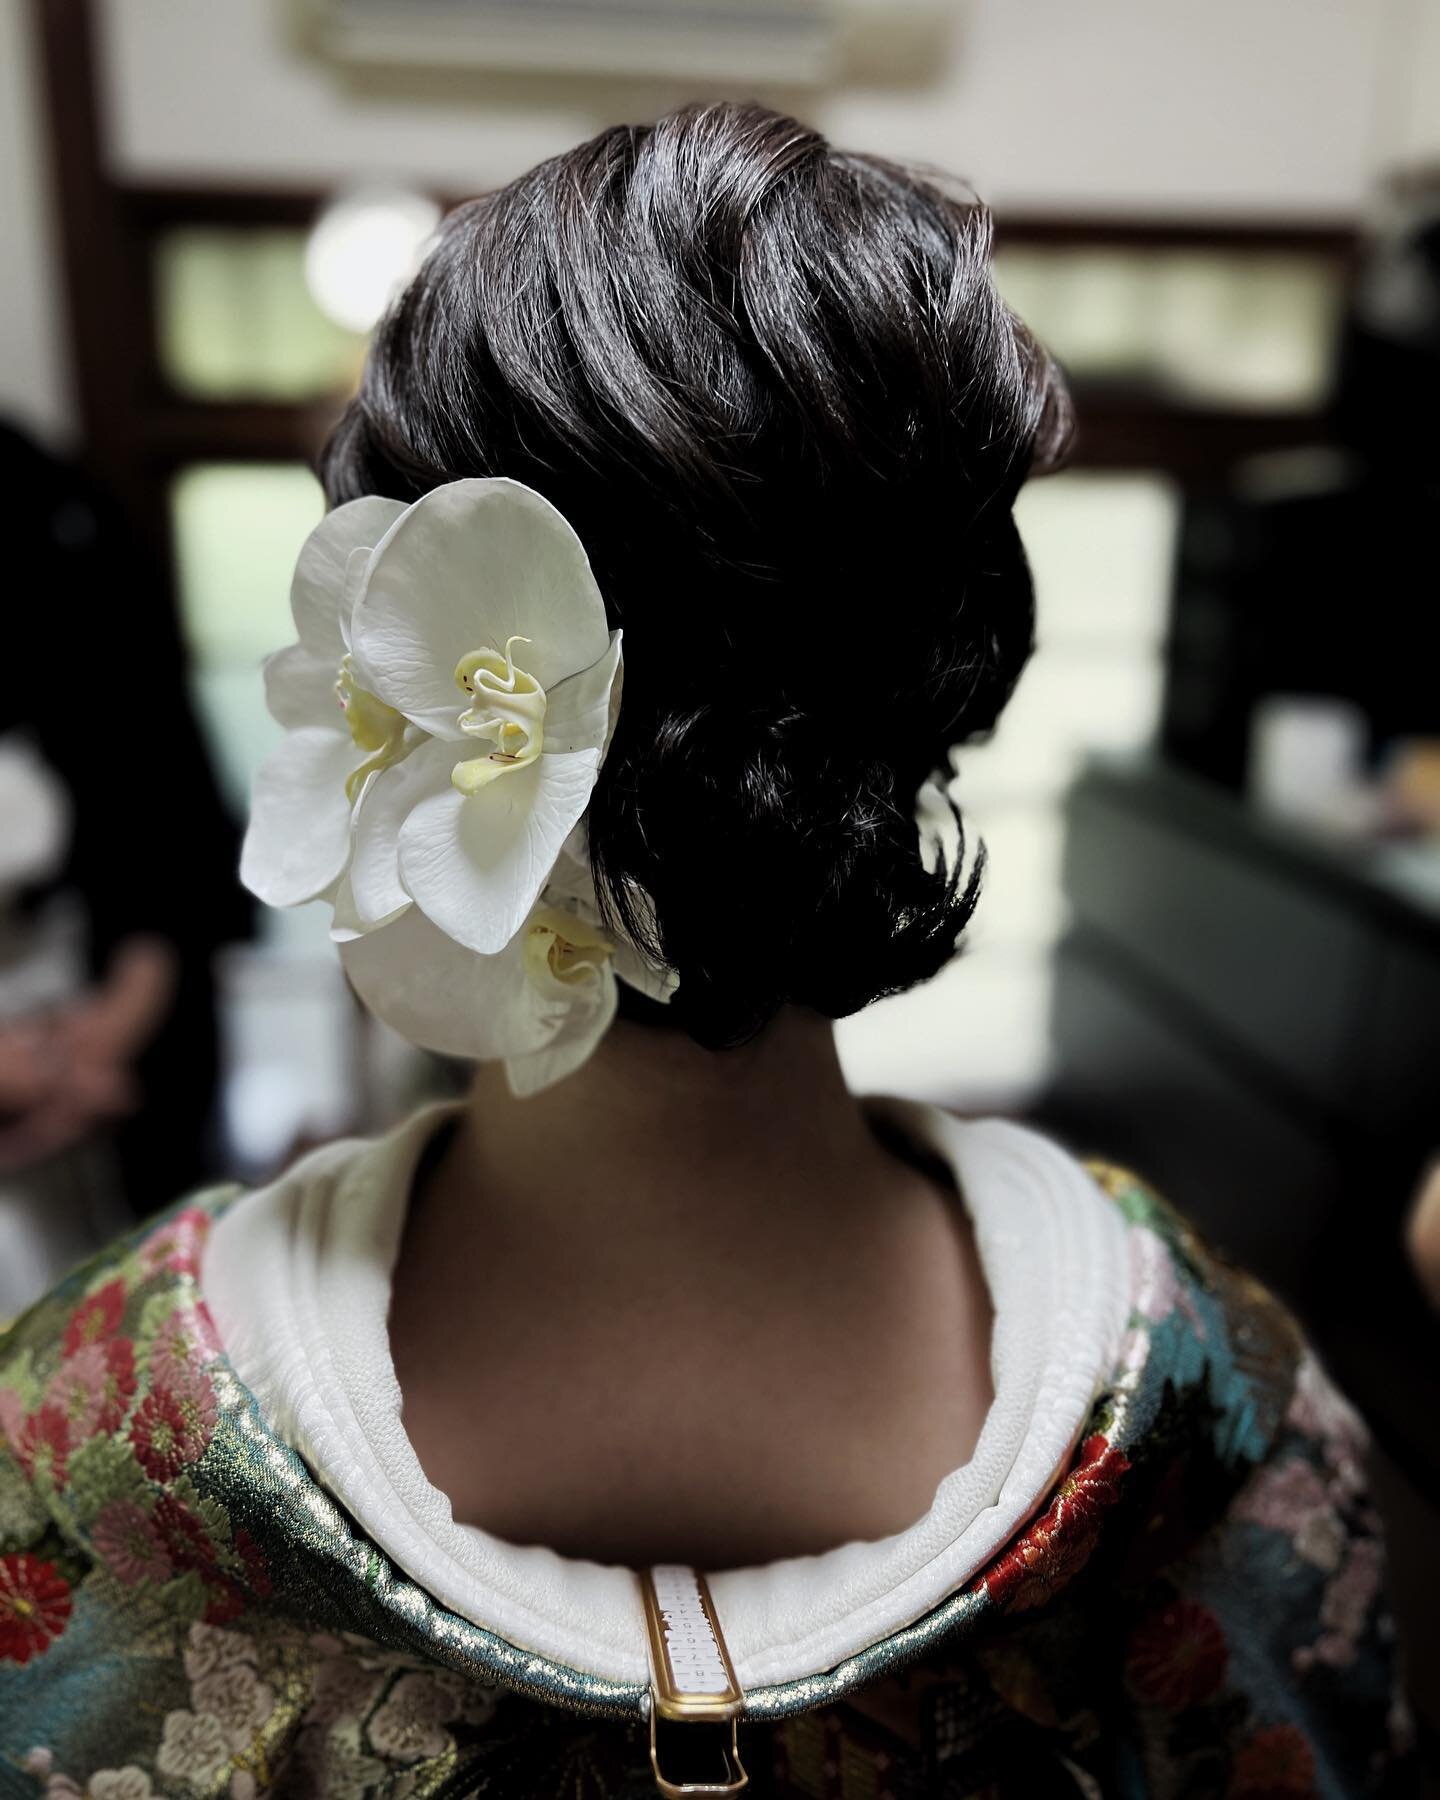 If you would like to take a wedding photo session with a Kimono, you need hire a experienced Kitsuke-shi = Kimono professional dresser.
. 

Wedding kimono gown is heavy!
But a skilled Kimono dresser will dress the most comfortable way possible!